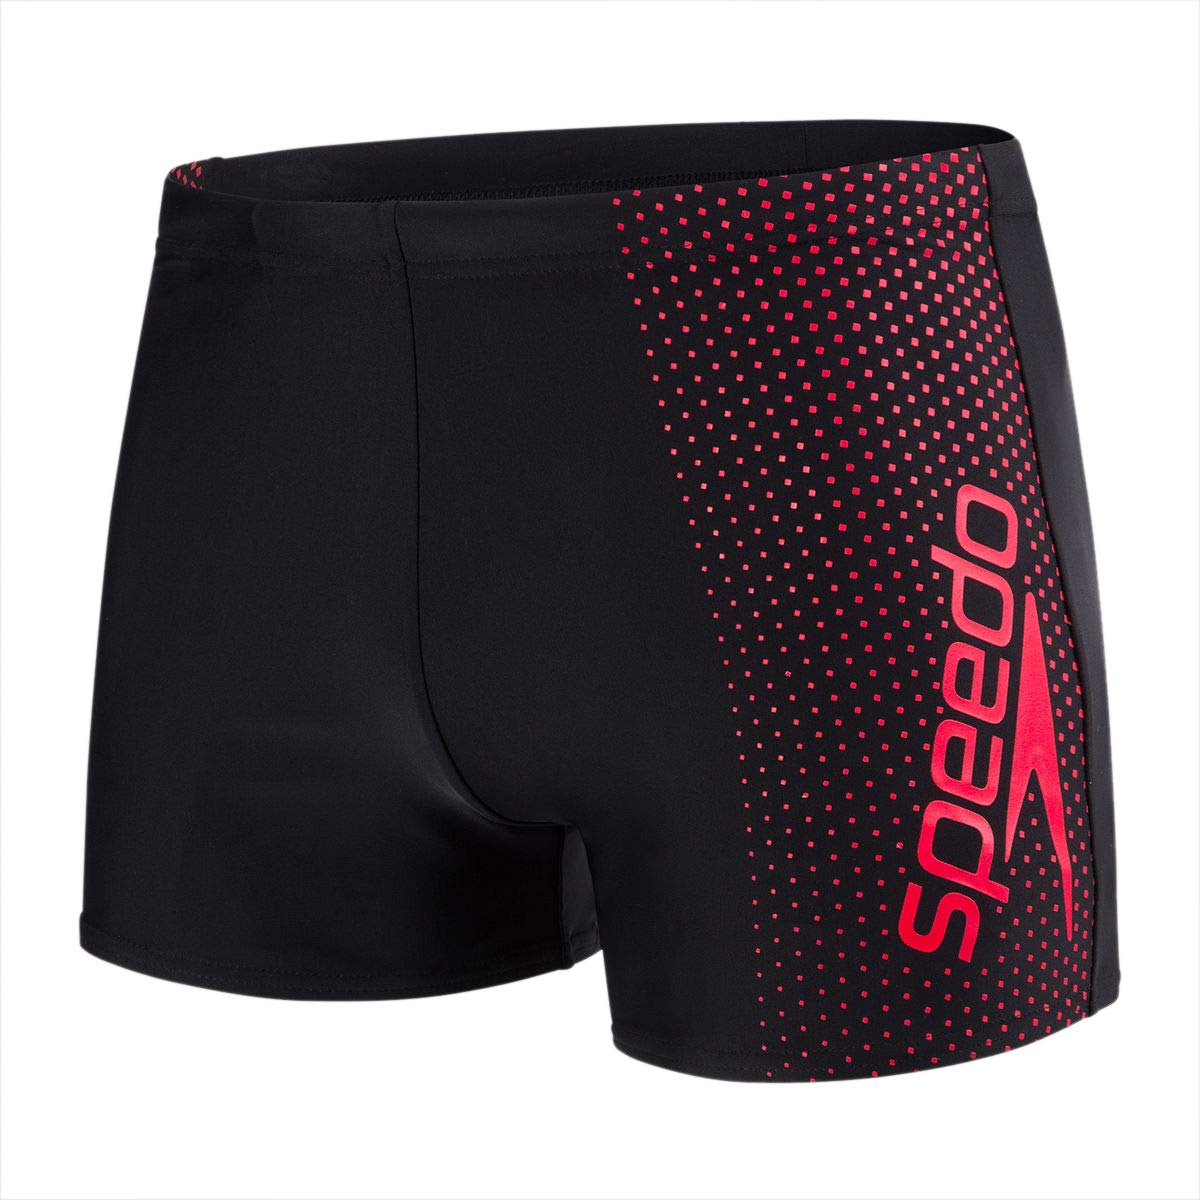 Speedo Gala Logo Swimming Aqua Shorts for Men's, Black/Lava Red - Best Price online Prokicksports.com